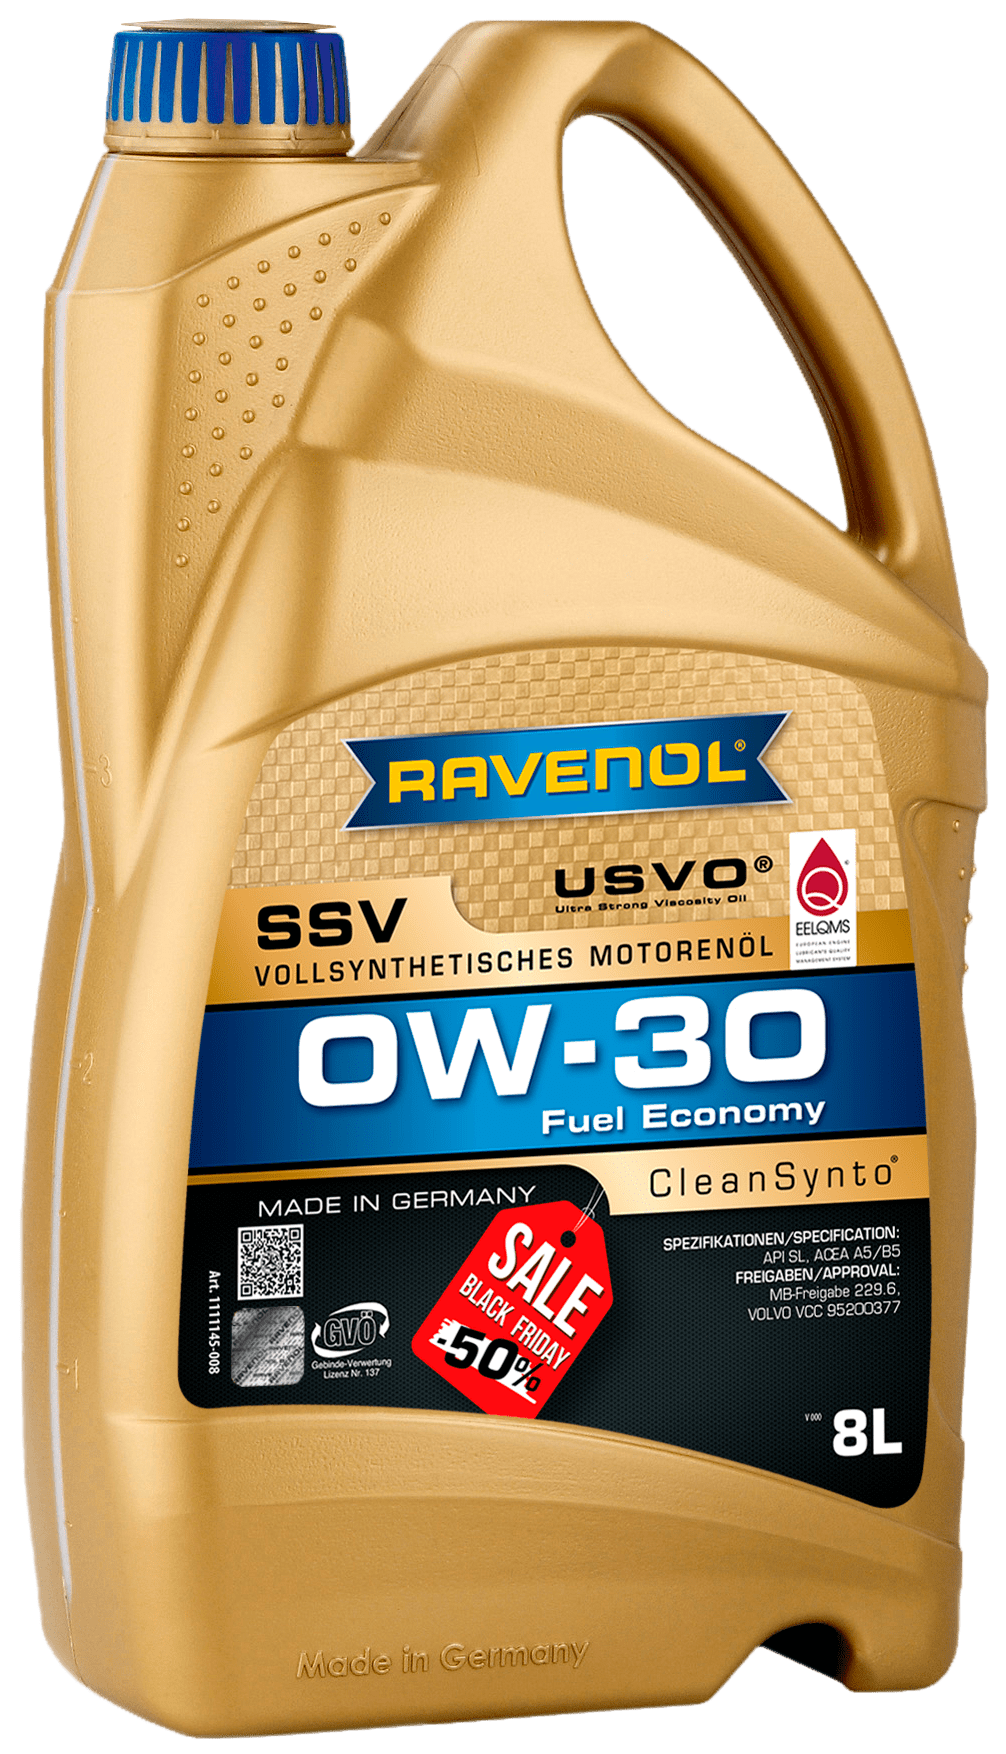 RAVENOL SSV Fuel Economy 0W-30